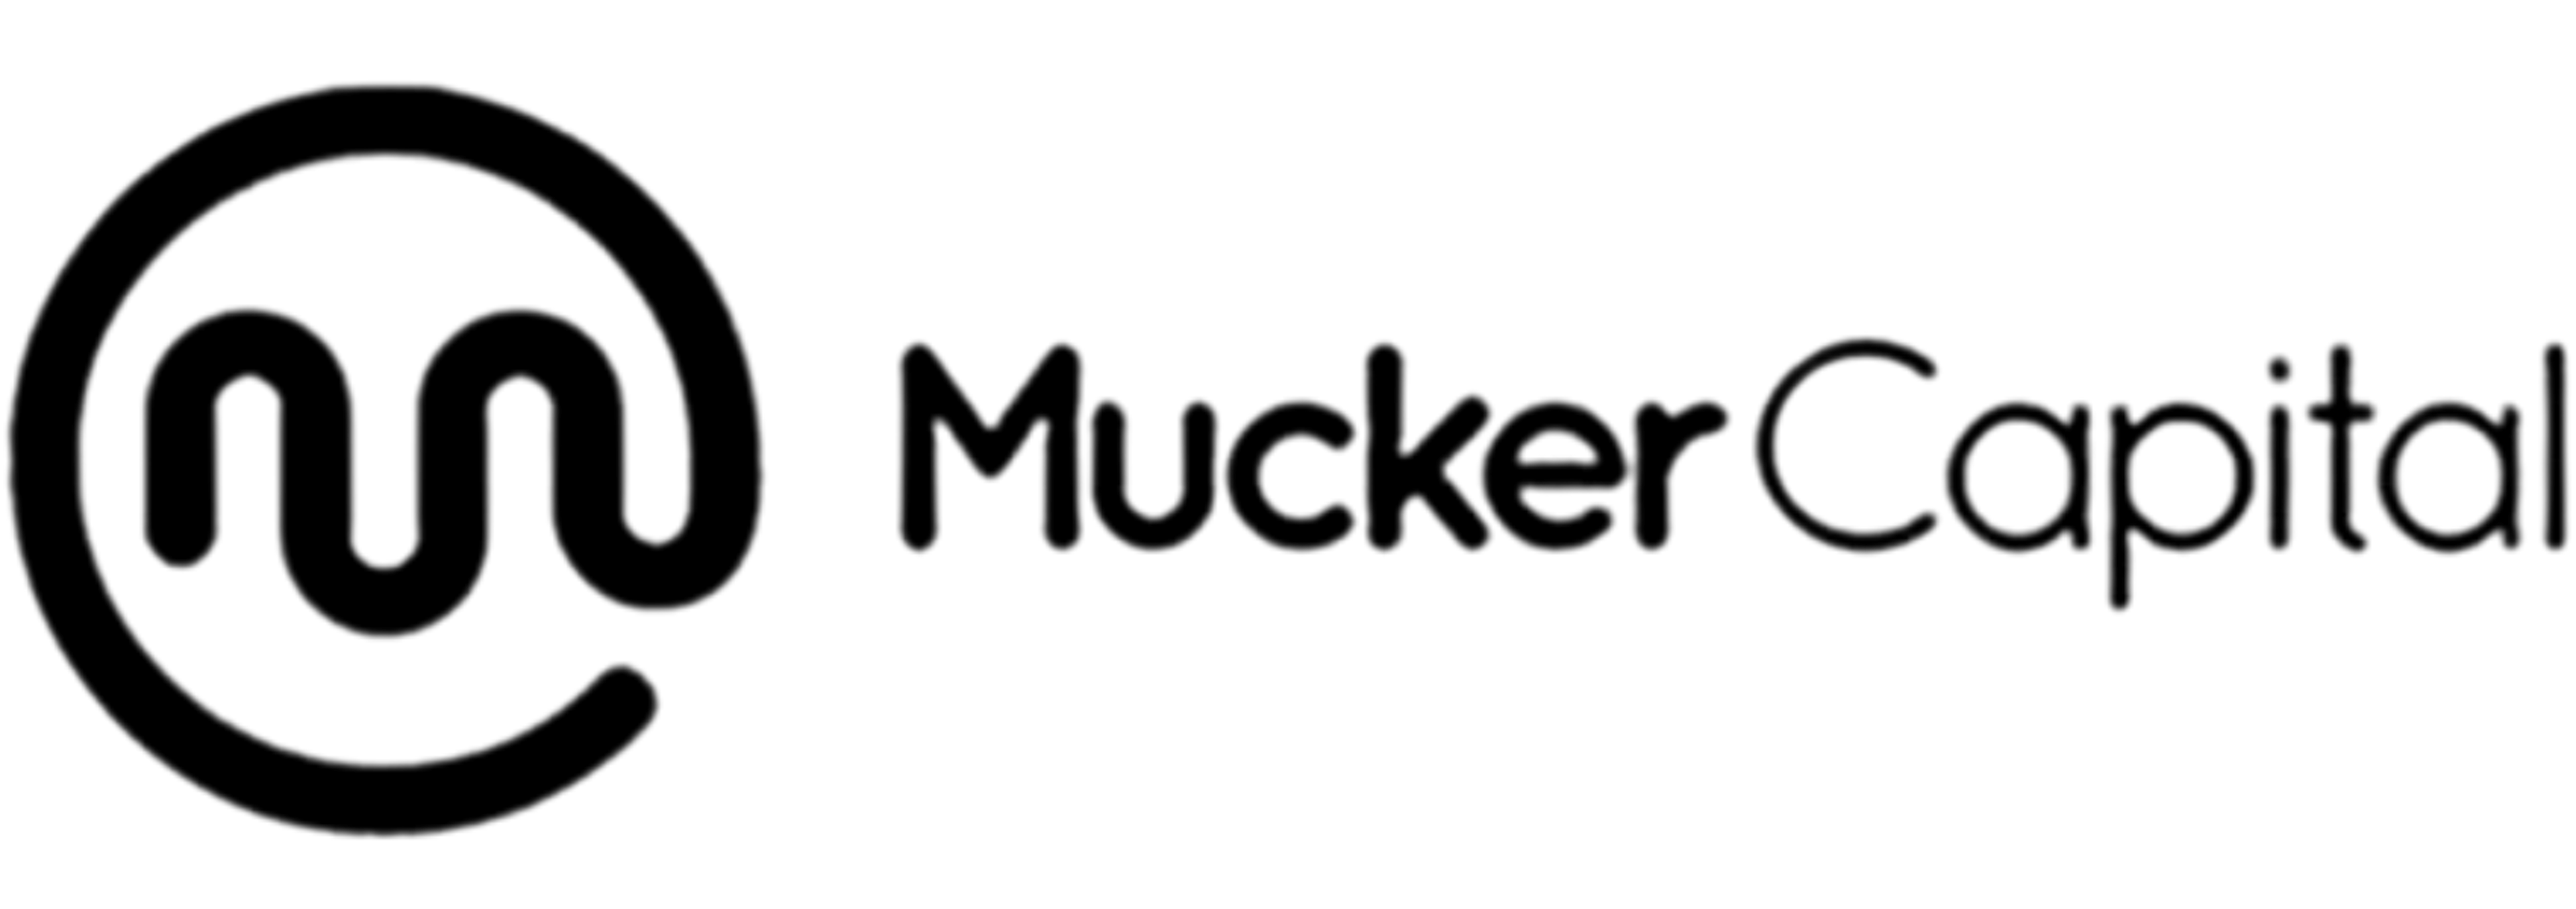 mucker capital logo